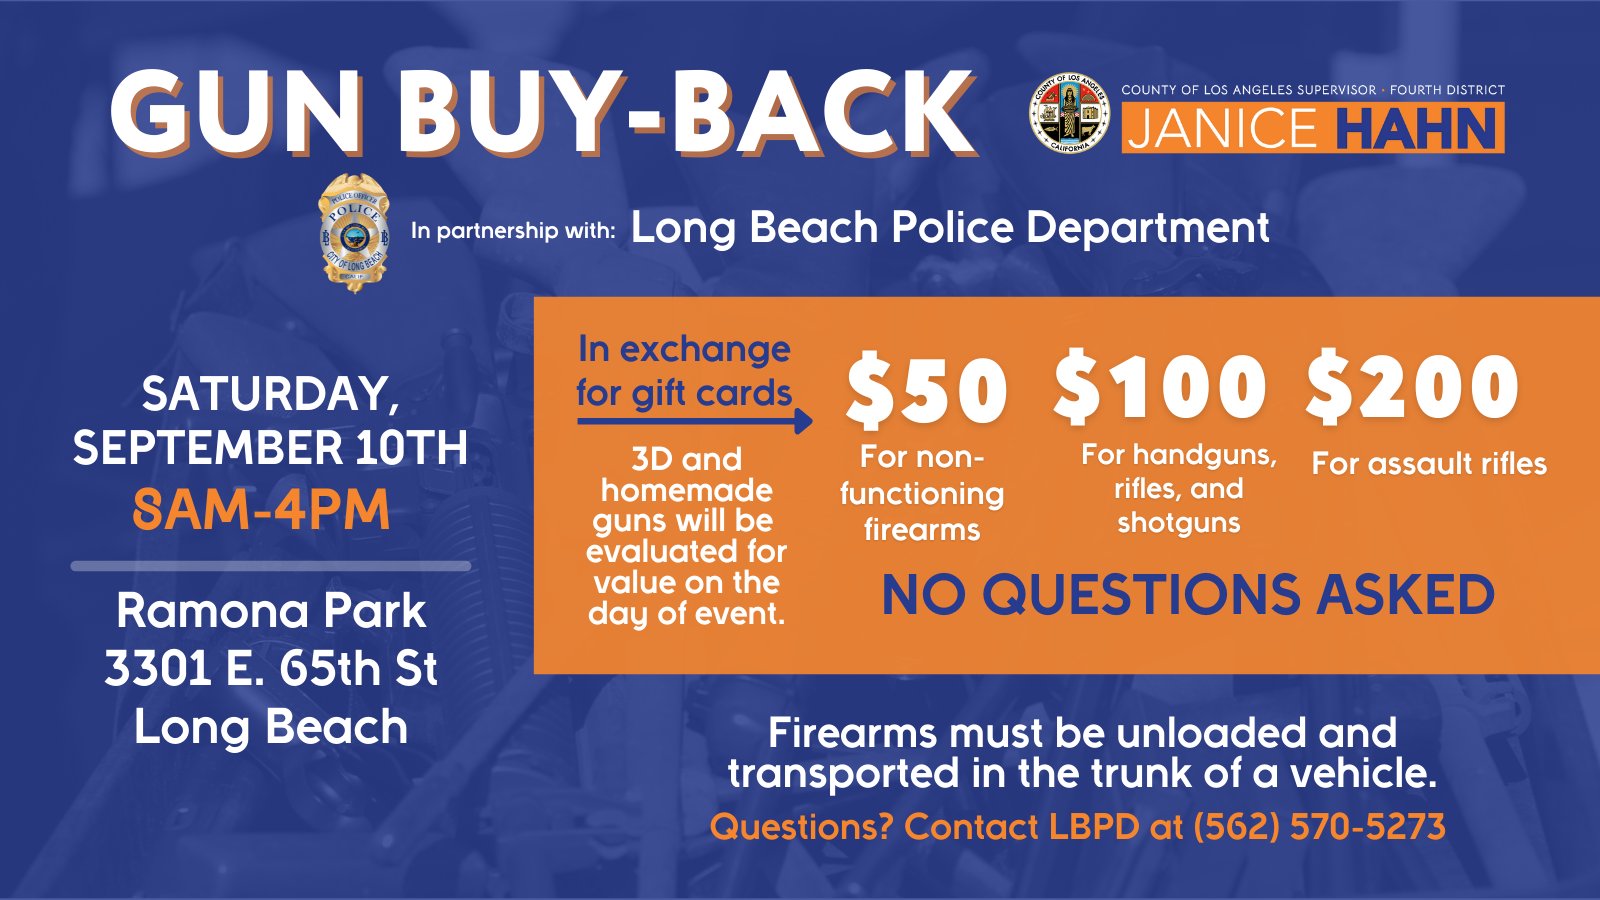 Supervisor Hahn to host Gun Buy-Back Event in North Long Beach